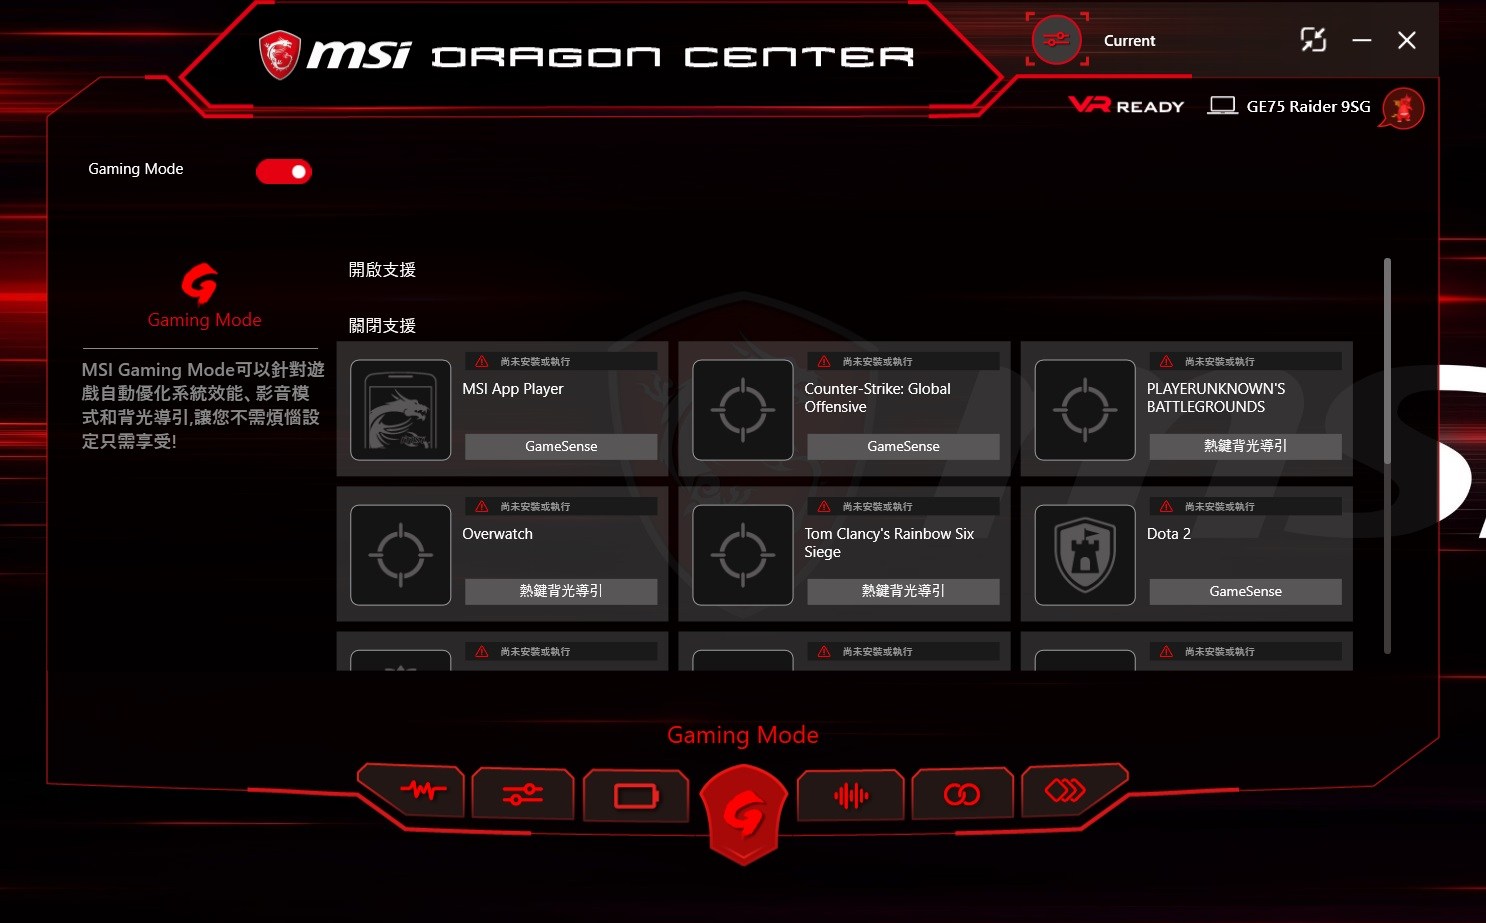 msi dragon center startup windows